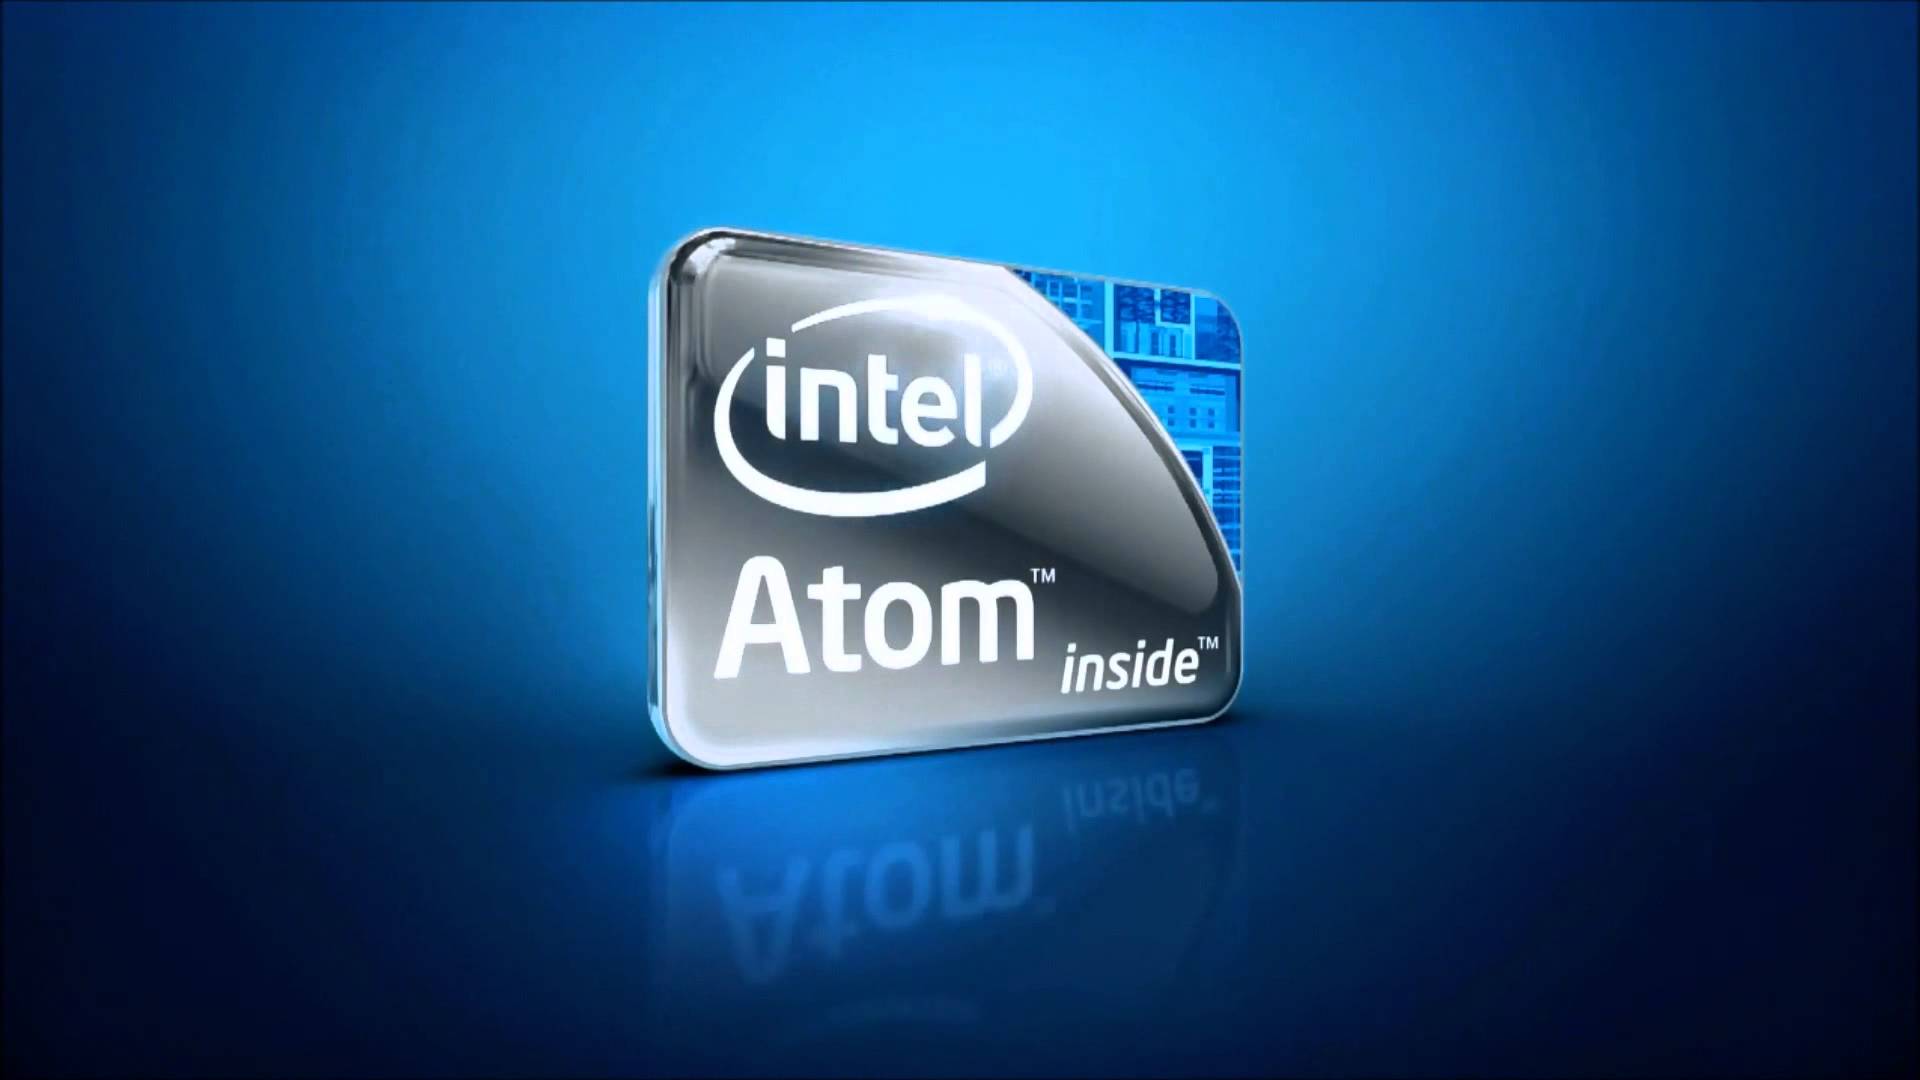 Intel Atom Images Crazy Gallery